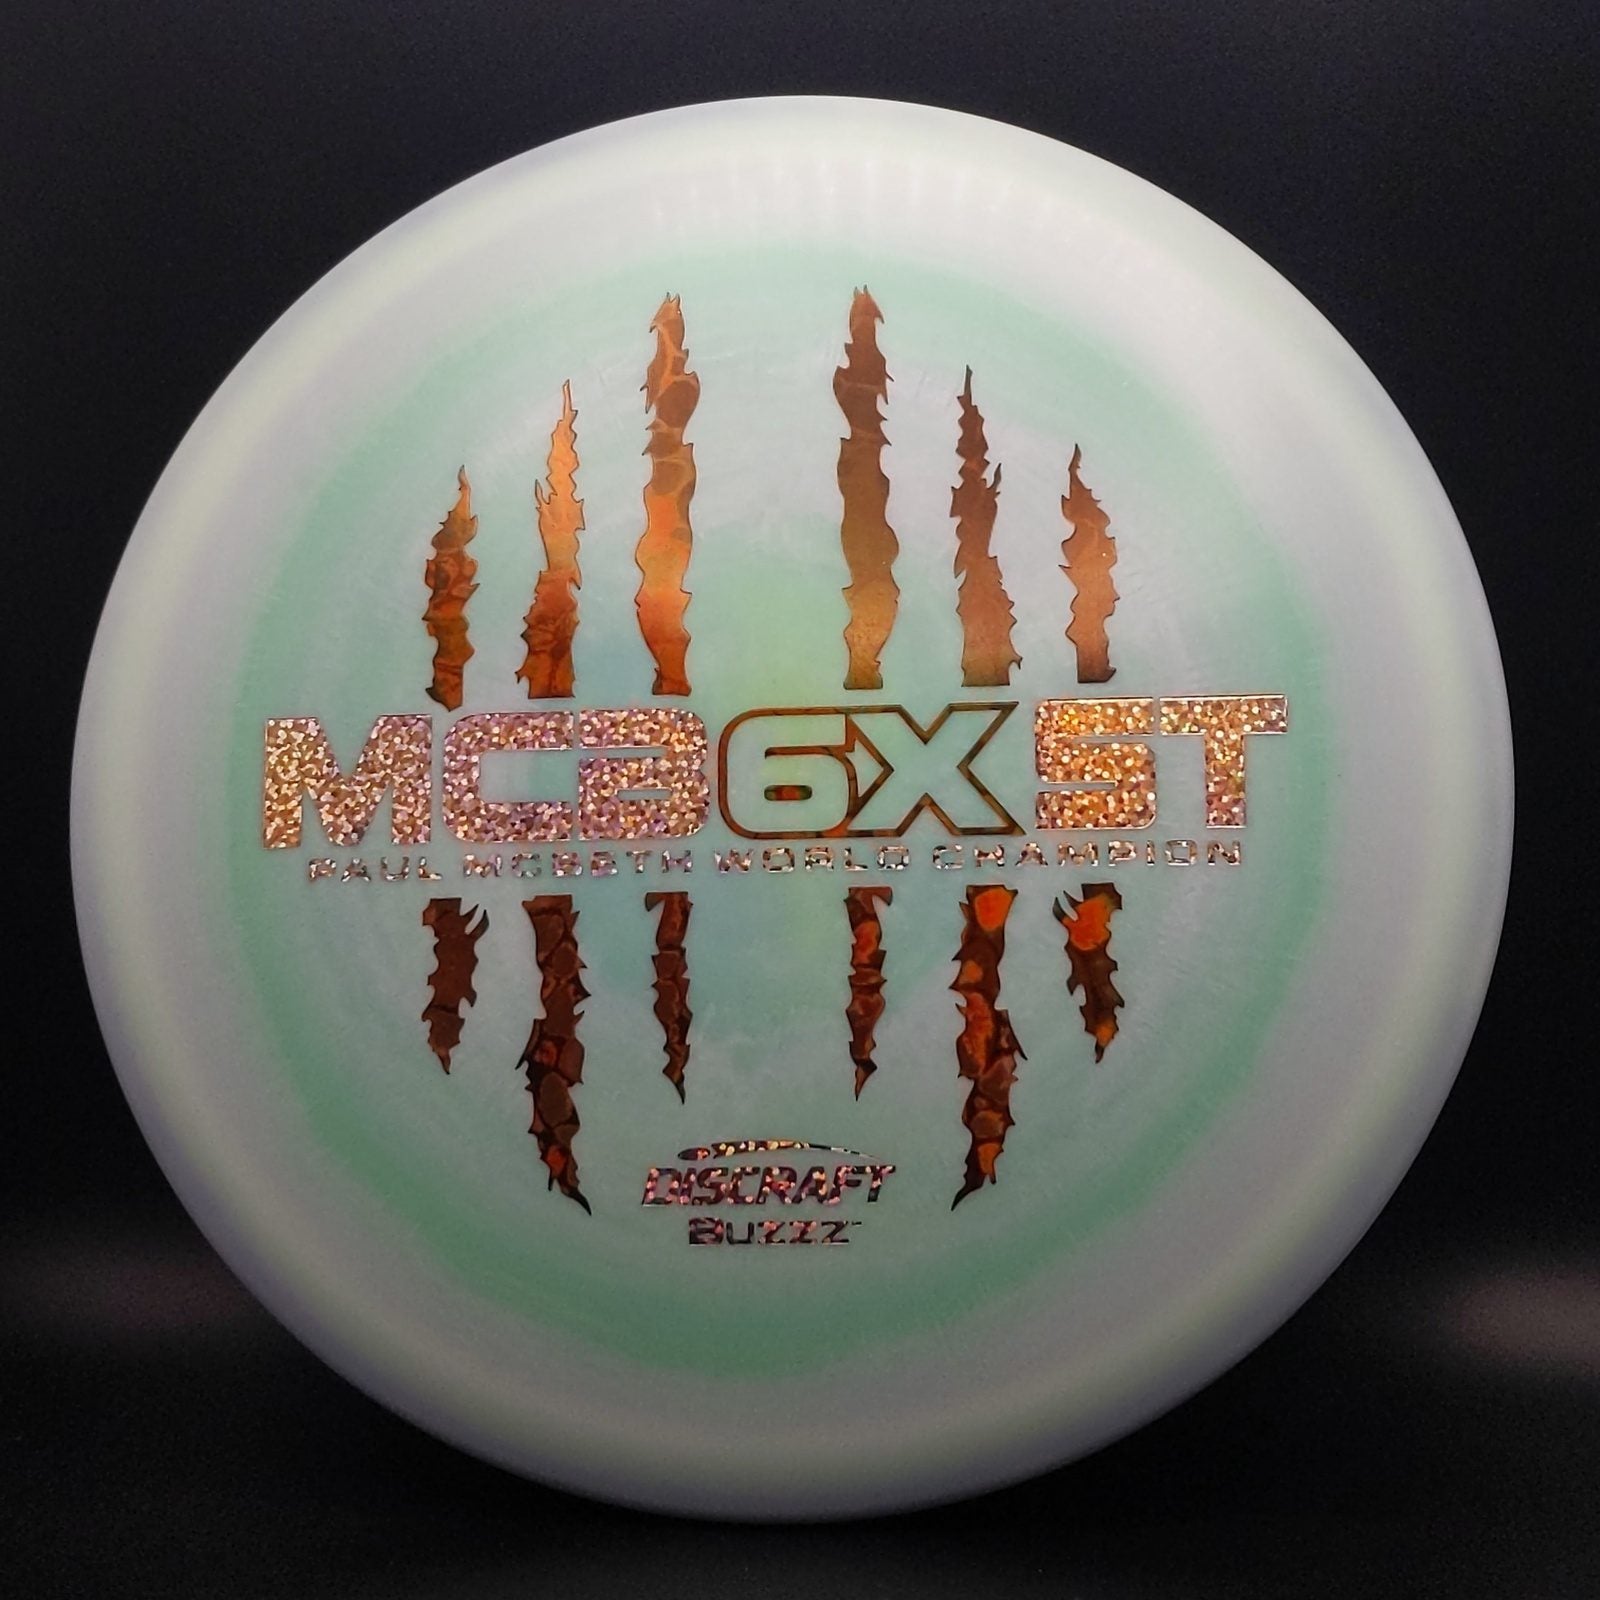 ESP Buzzz - Paul McBeth 6x Claw World Champion - MCB6XST Edition Discraft